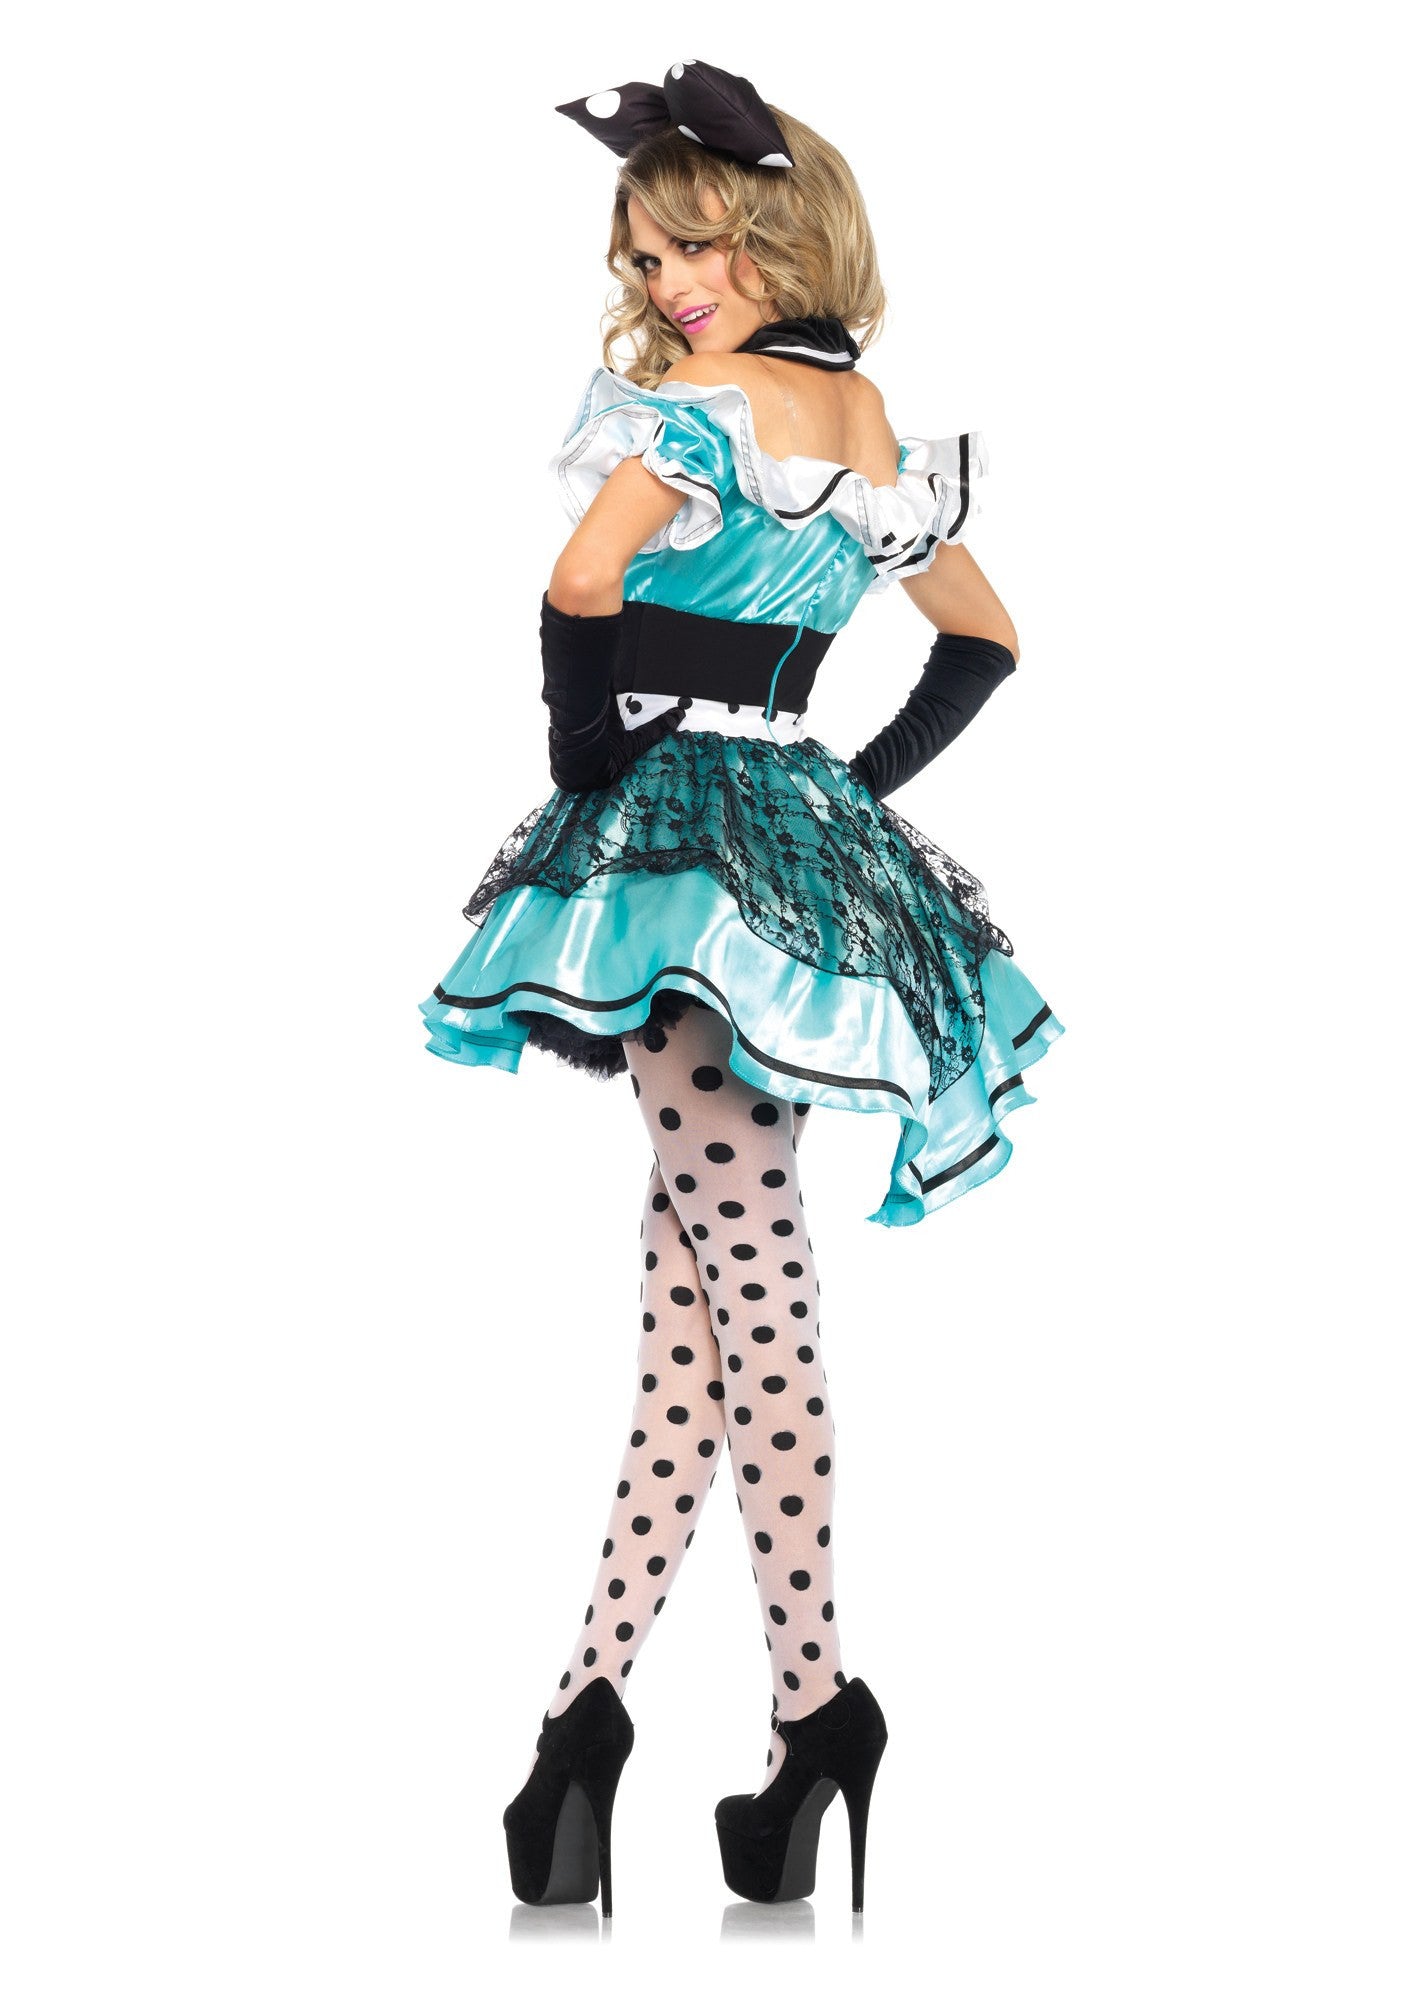 Costume - Delightful Alice Costume